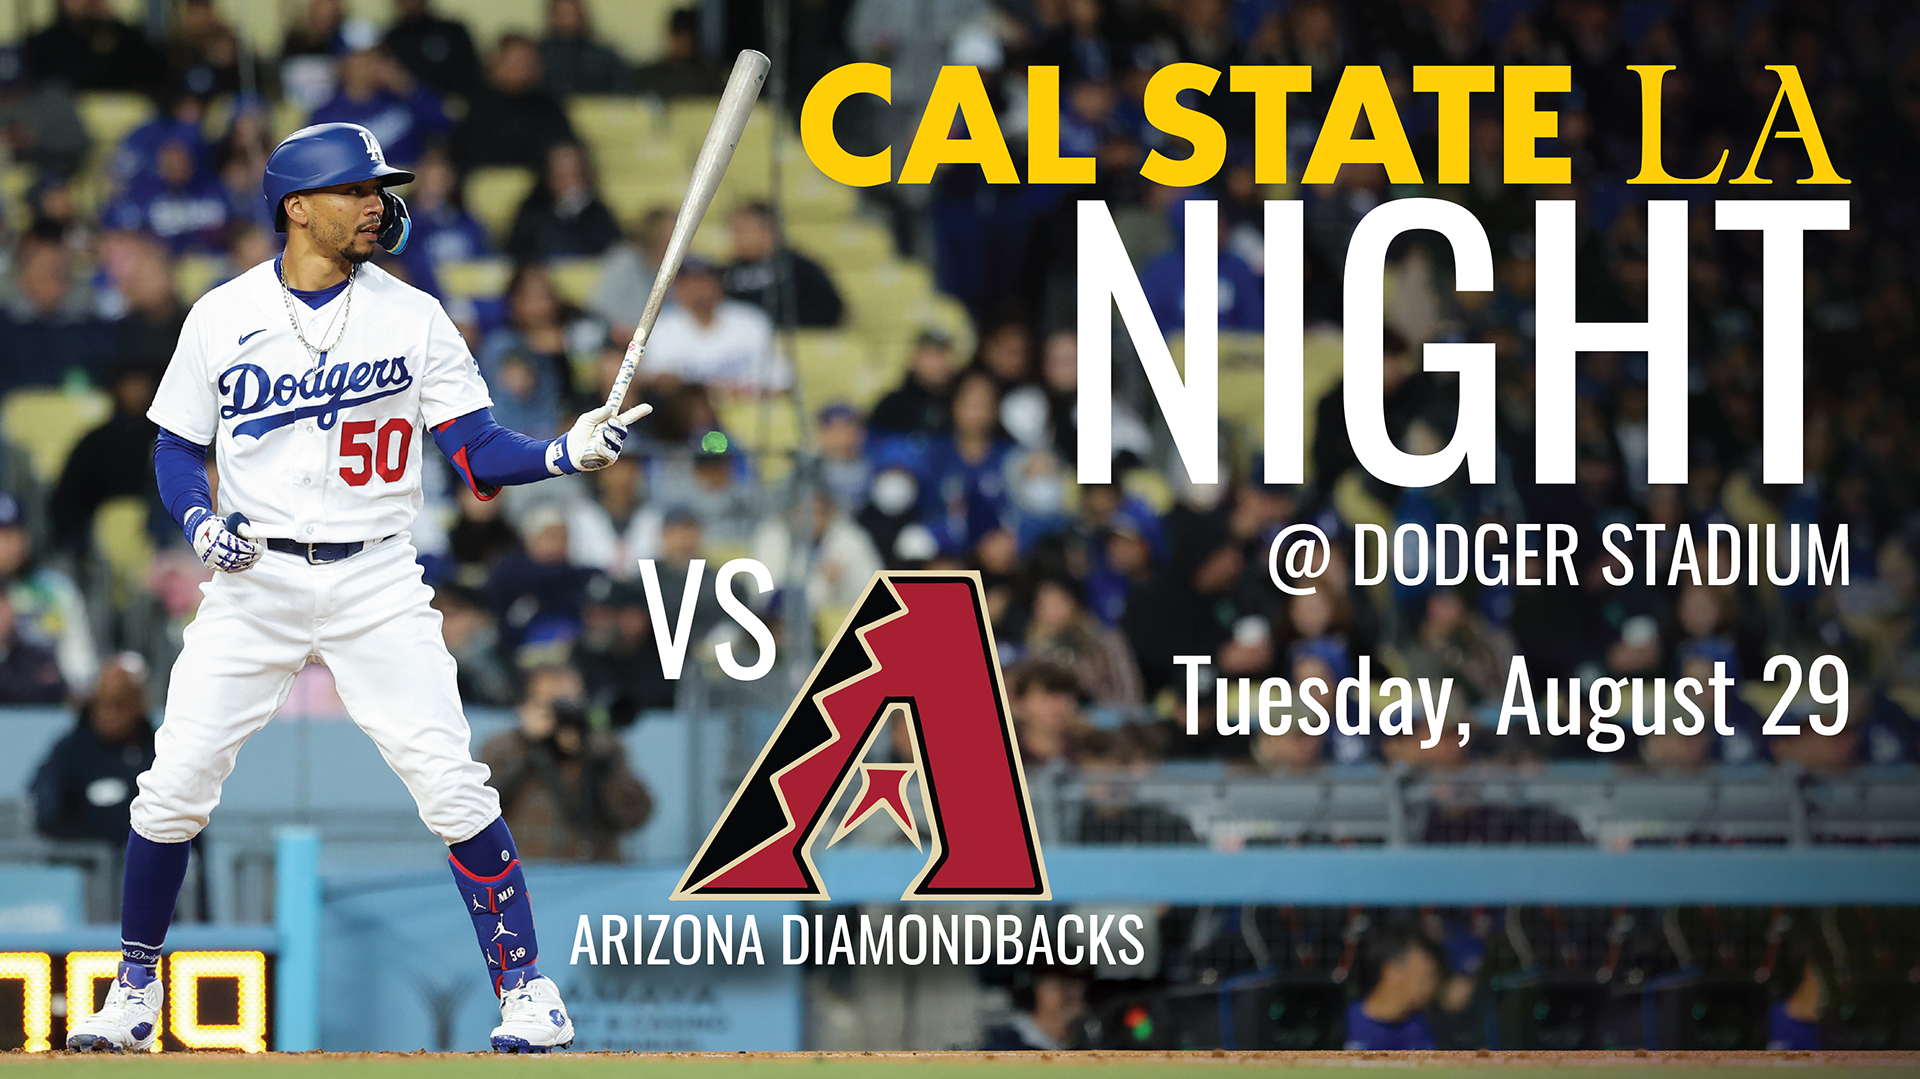 Mookie Betts at bat. Text reads: Cal State LA Night at Dodger Stadium, Tuesday August 29, vs. Arizona Diamondbacks